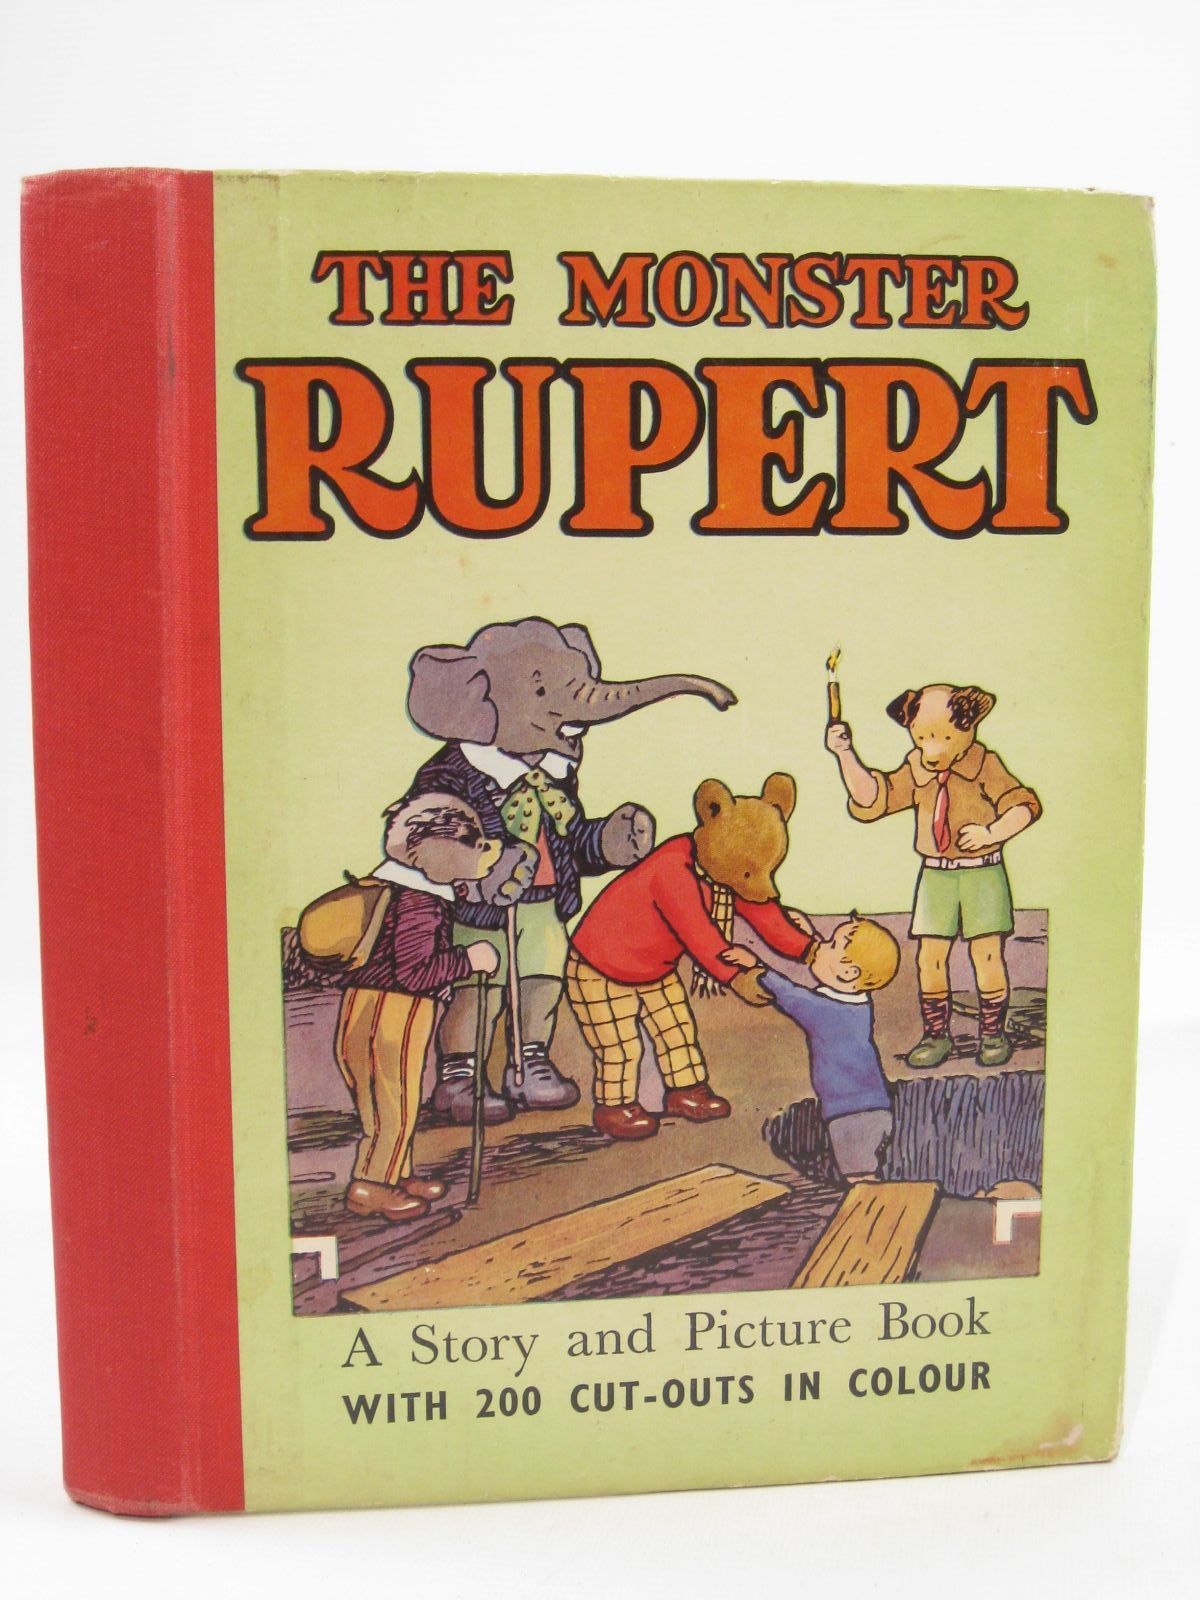 TOURTEL, MARY ILLUSTRATED BY TOURTEL, MARY - The Monster Rupert